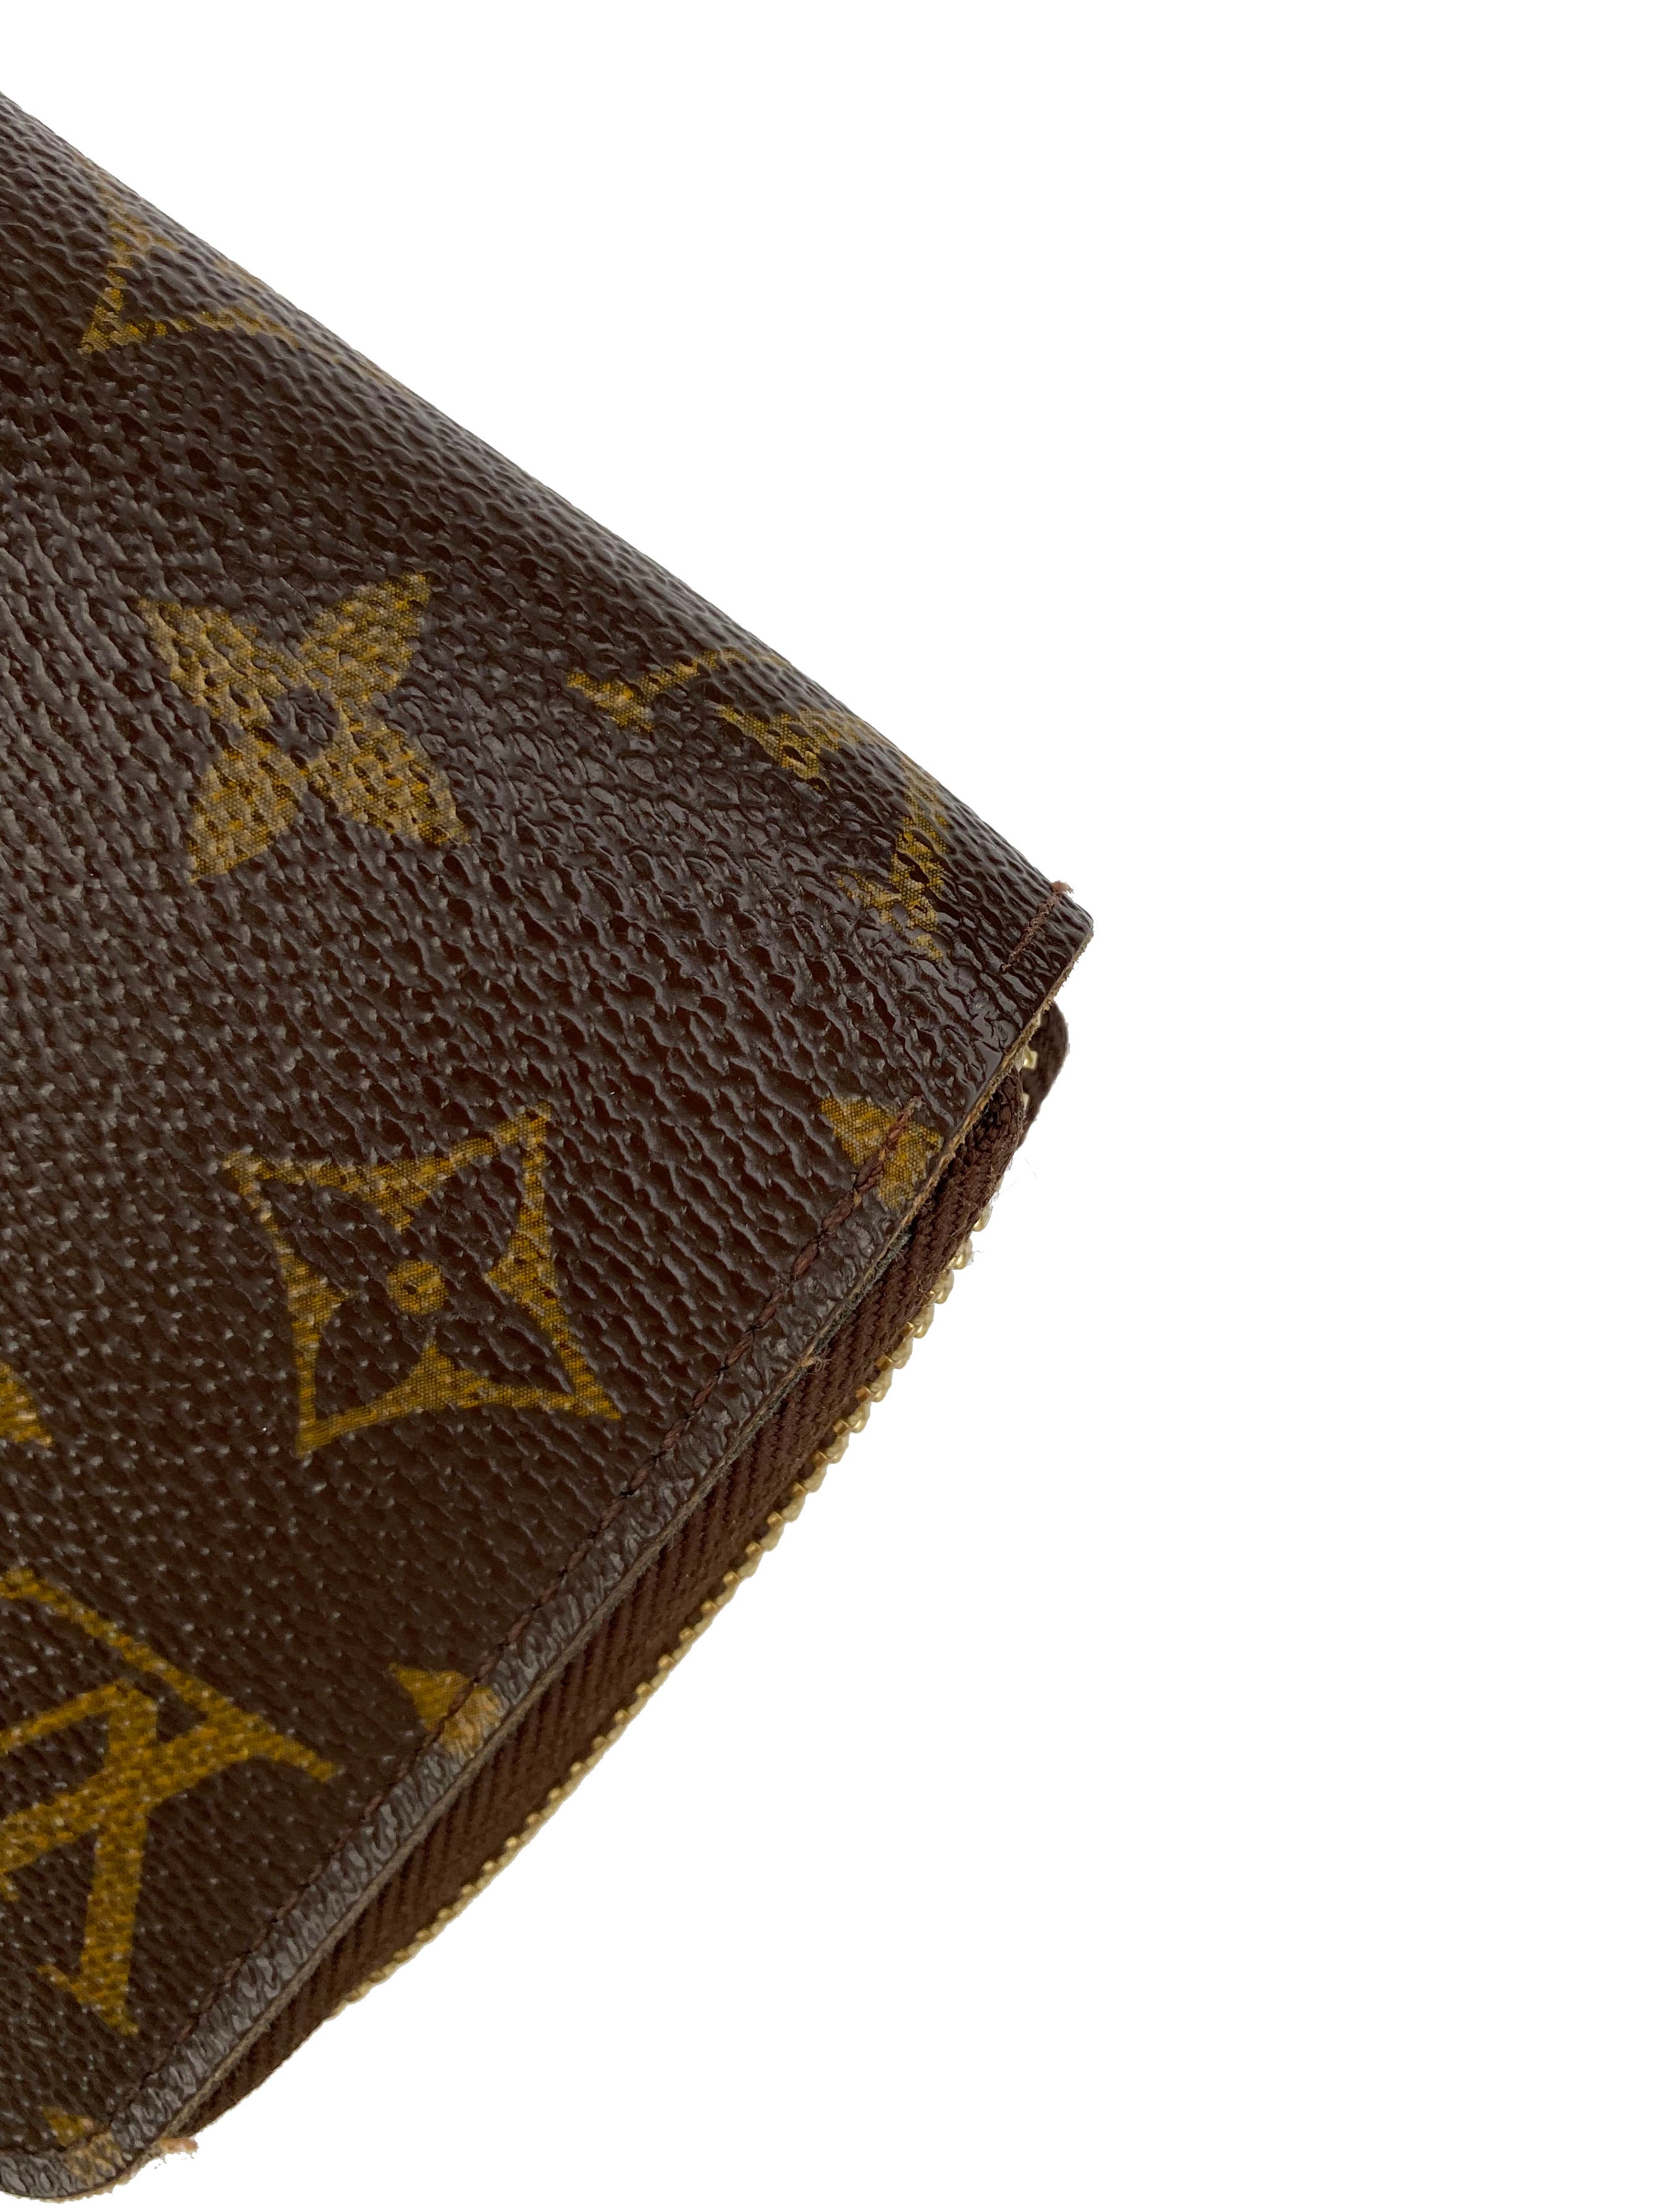 Louis Vuitton Brown Zippy Wallet